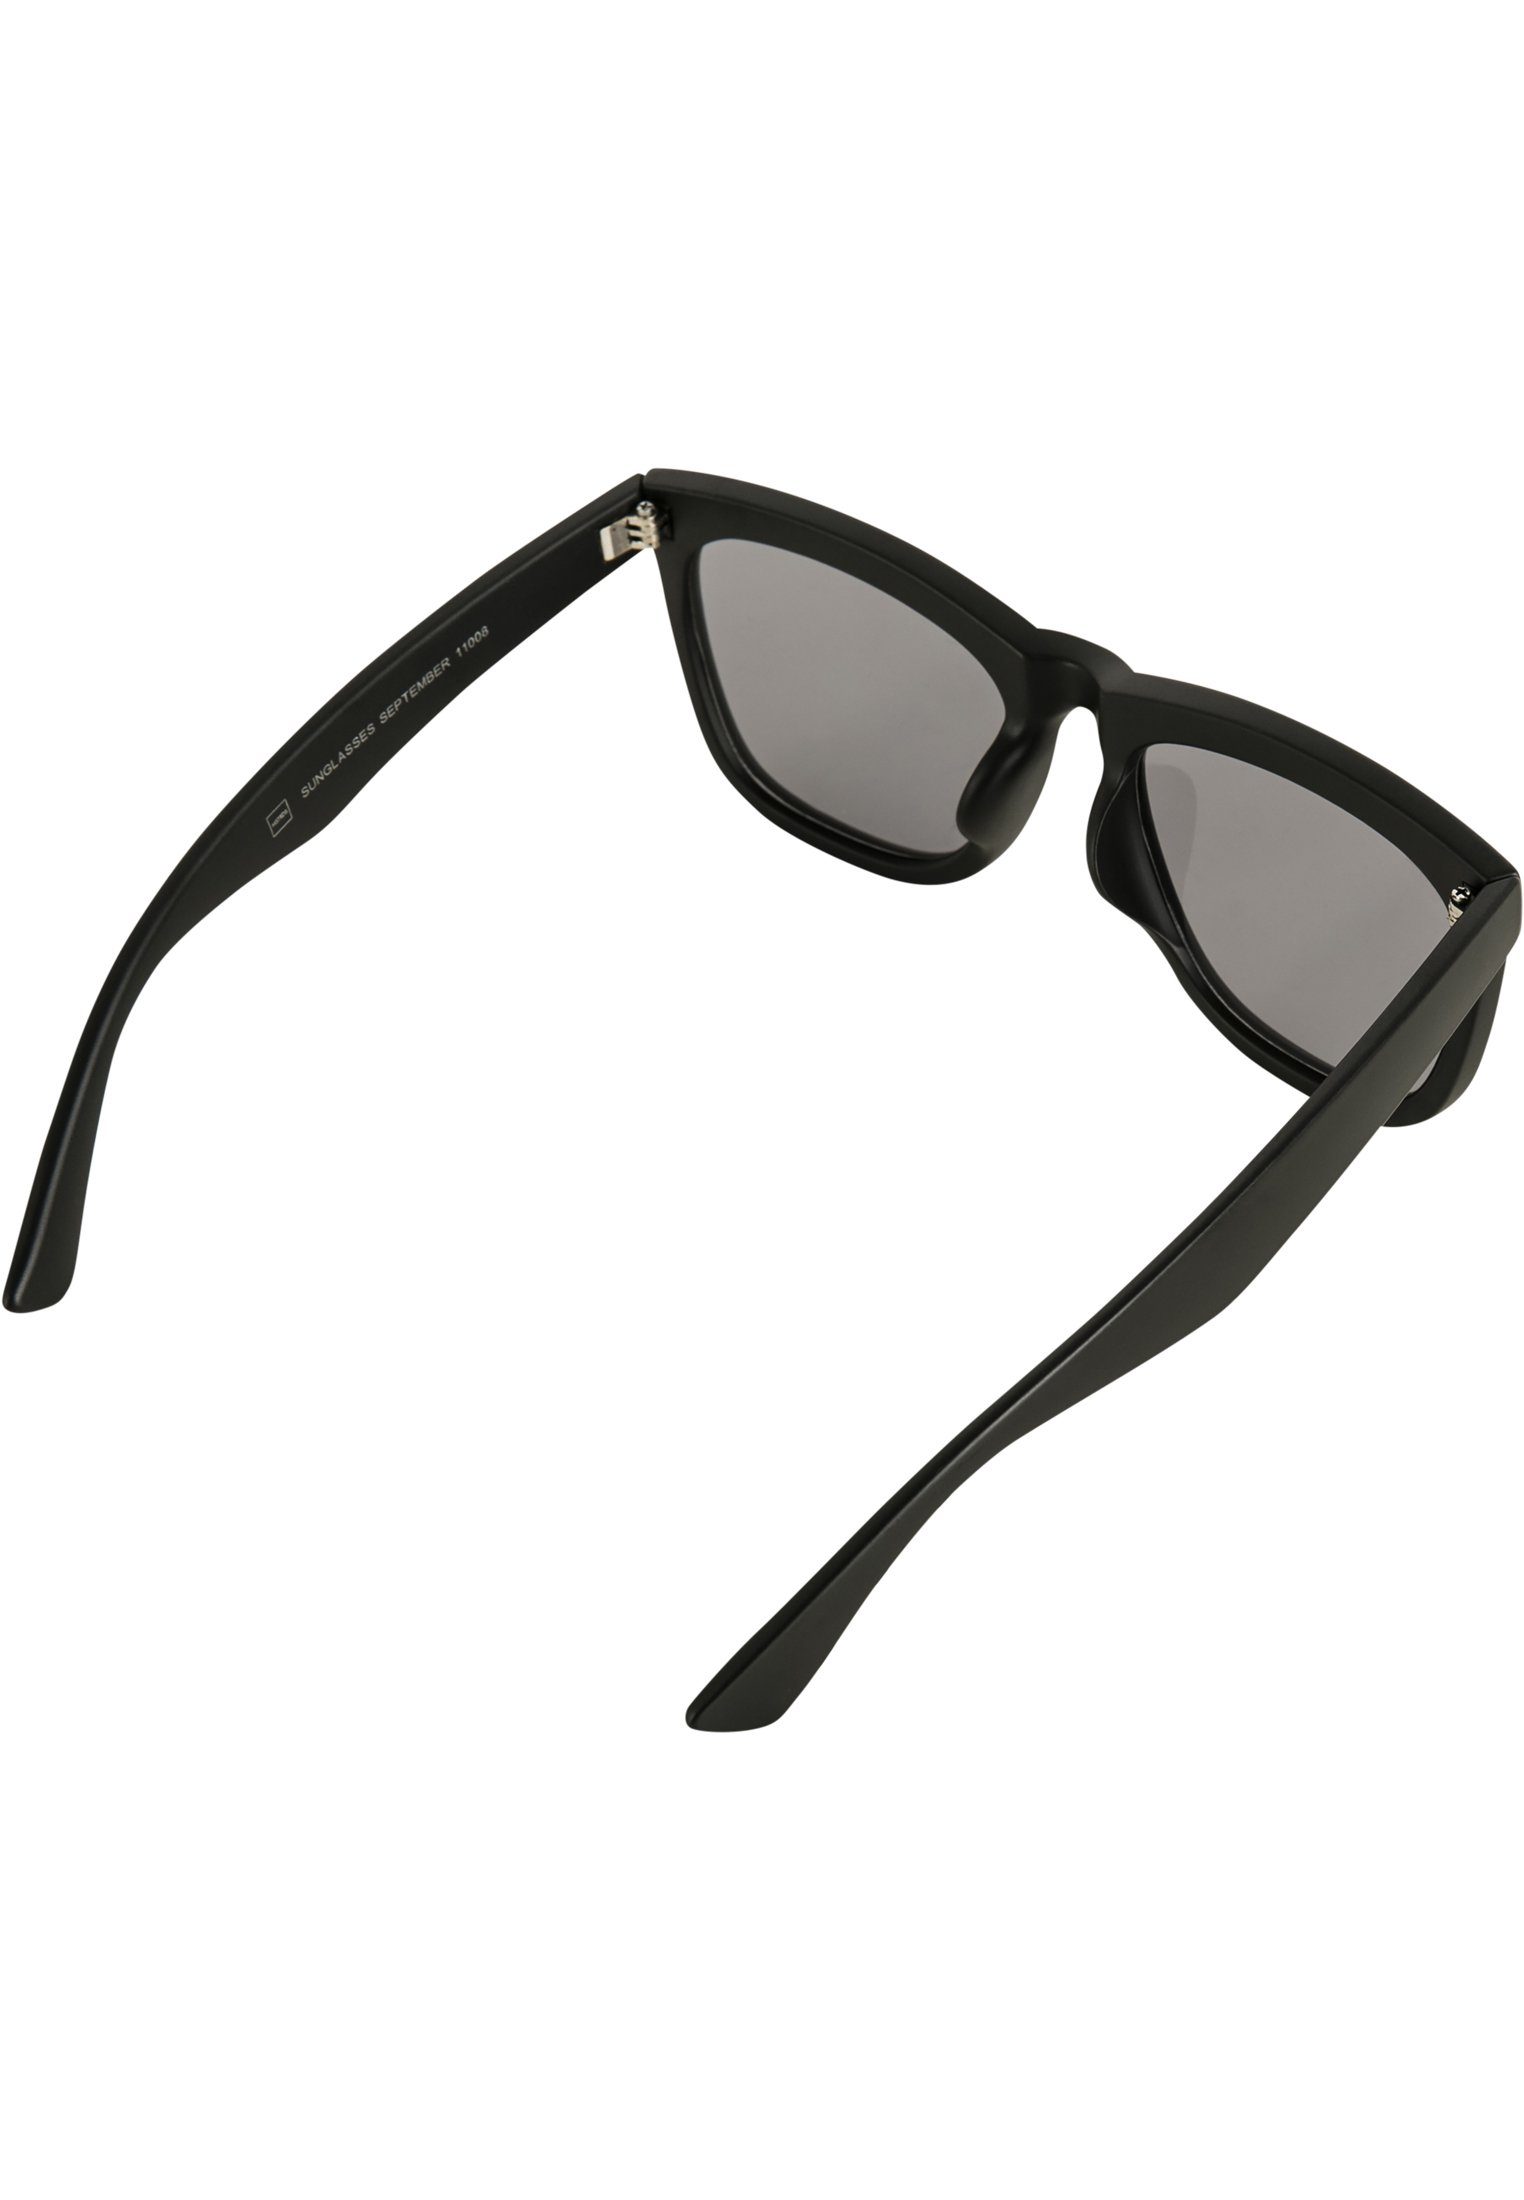 Sunglasses September Accessoires Sonnenbrille MSTRDS black/black